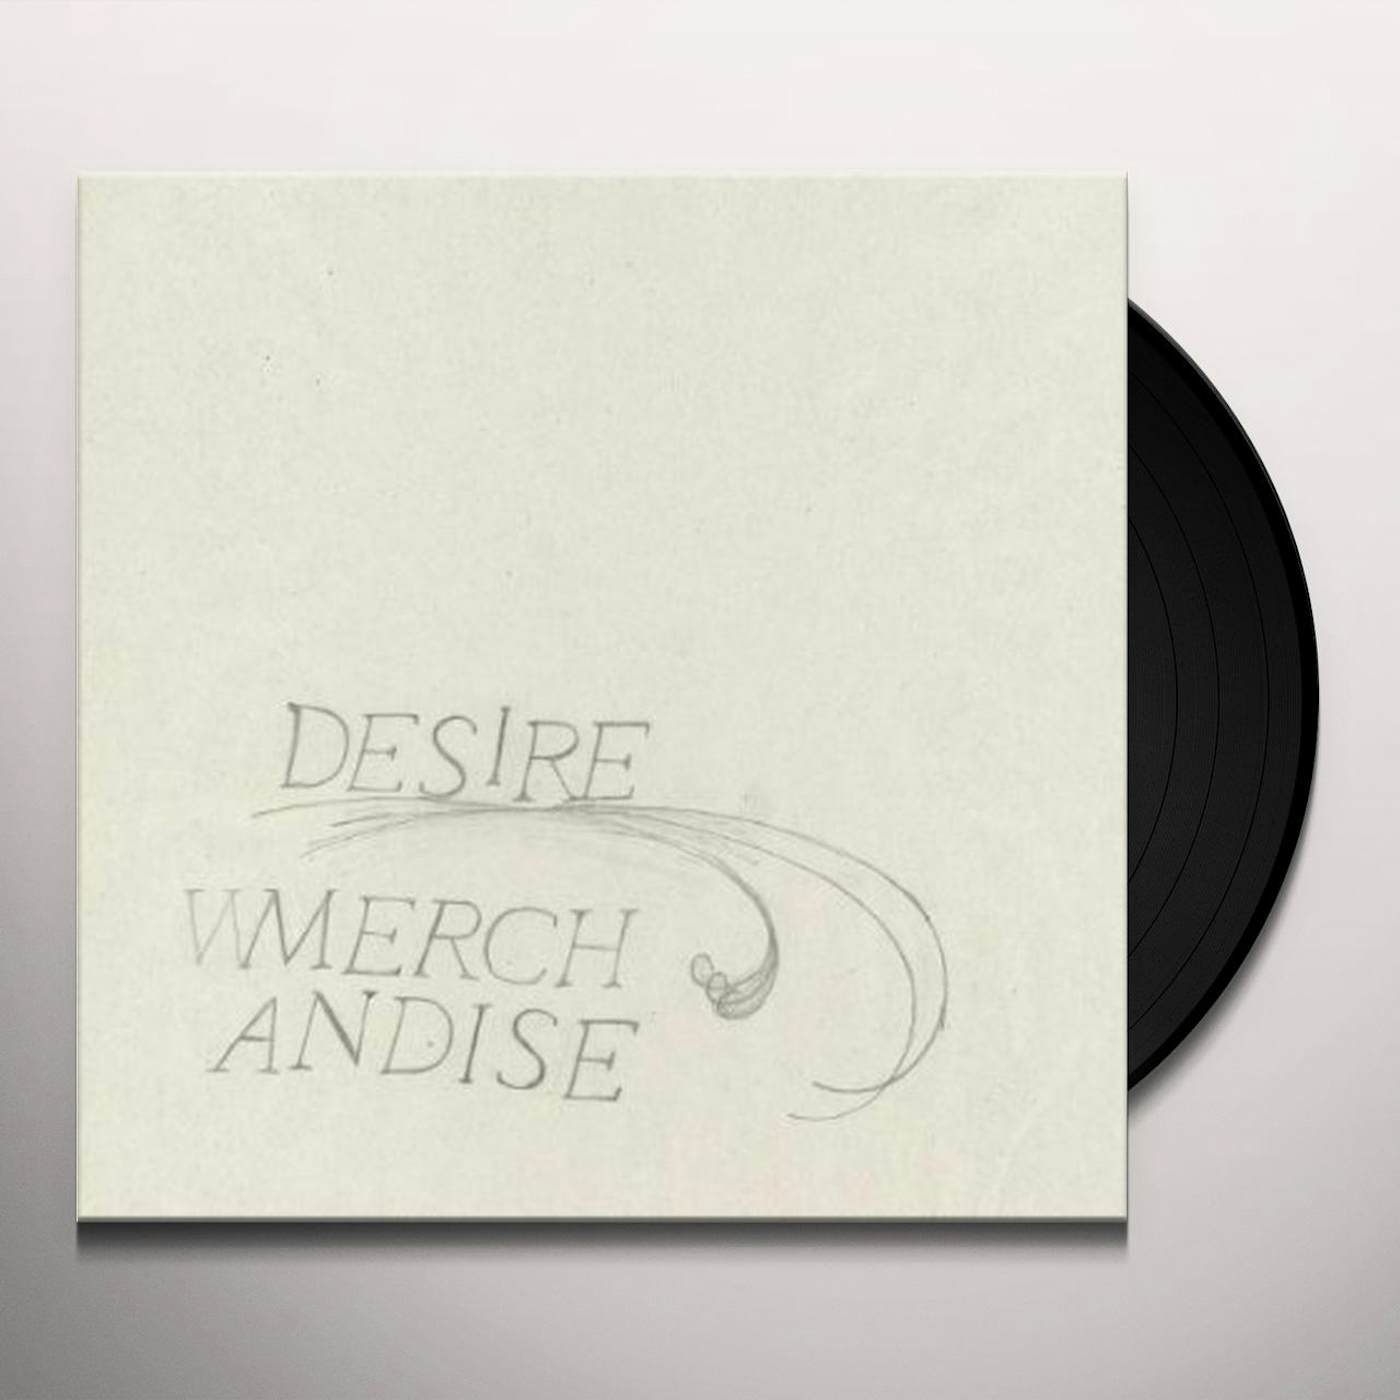 Merchandise Children Of Desire Vinyl Record